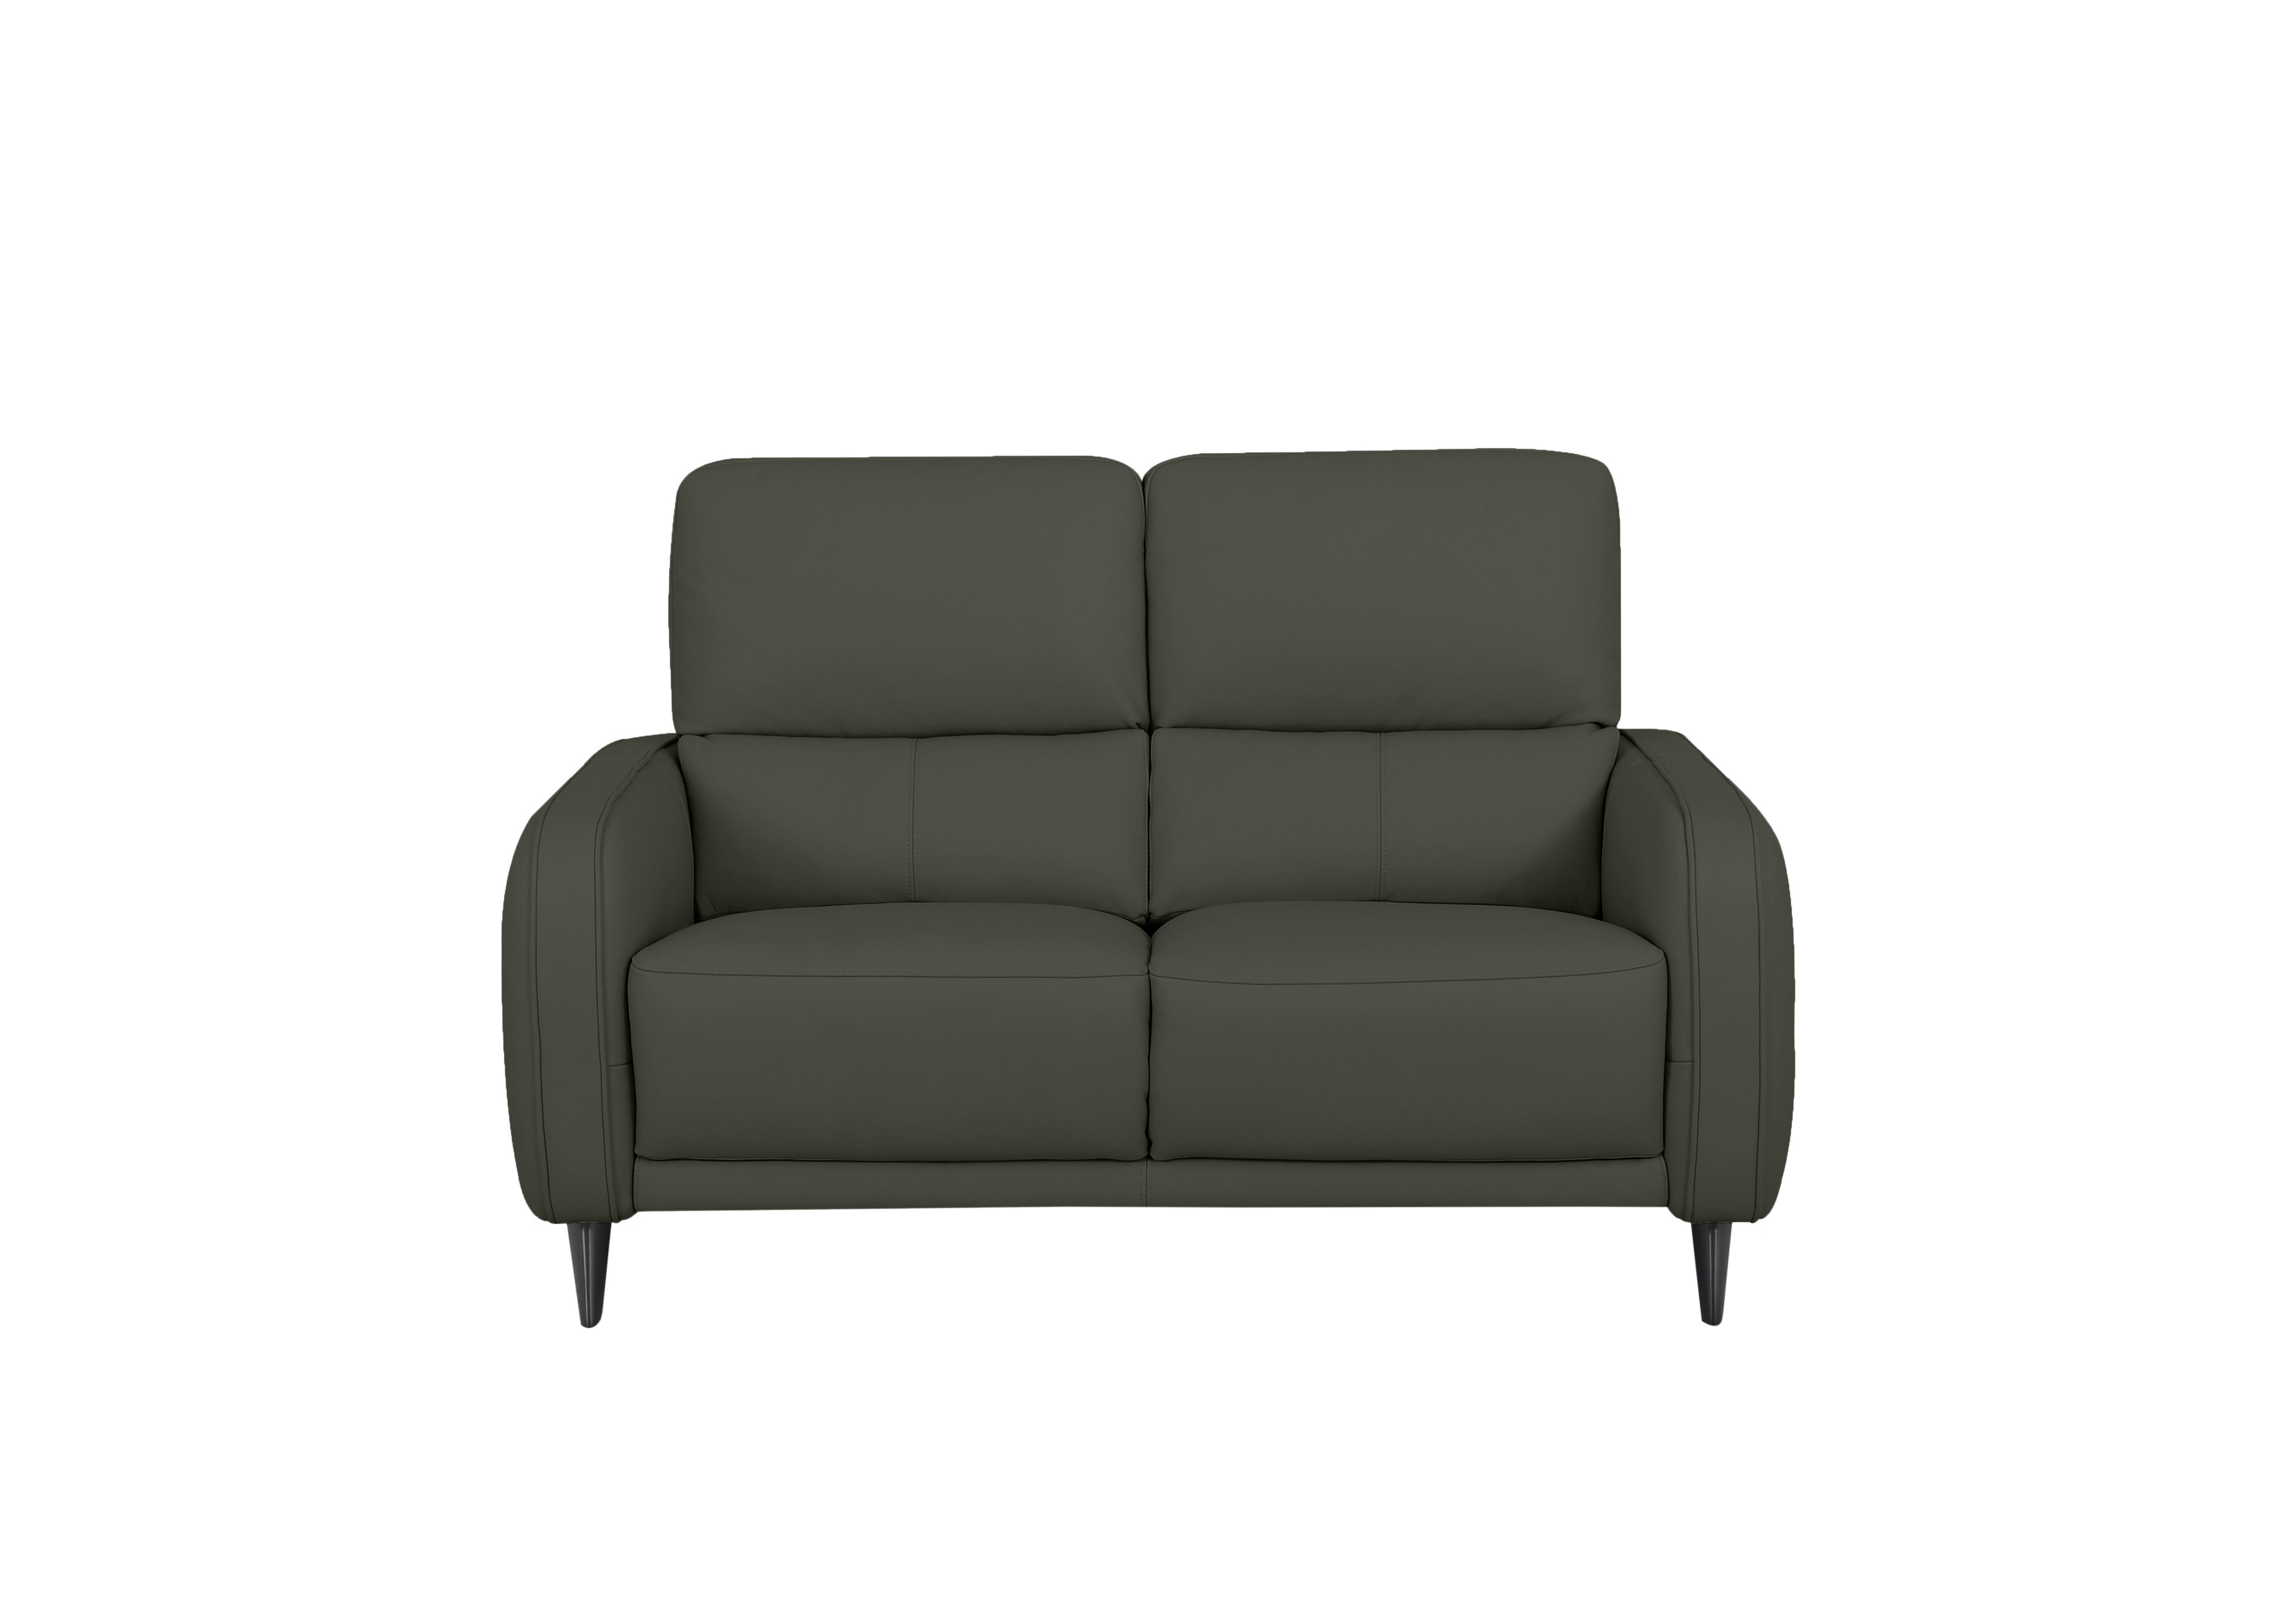 Logan 2 Seater Leather Sofa in Np-548e Dark Olive on Furniture Village